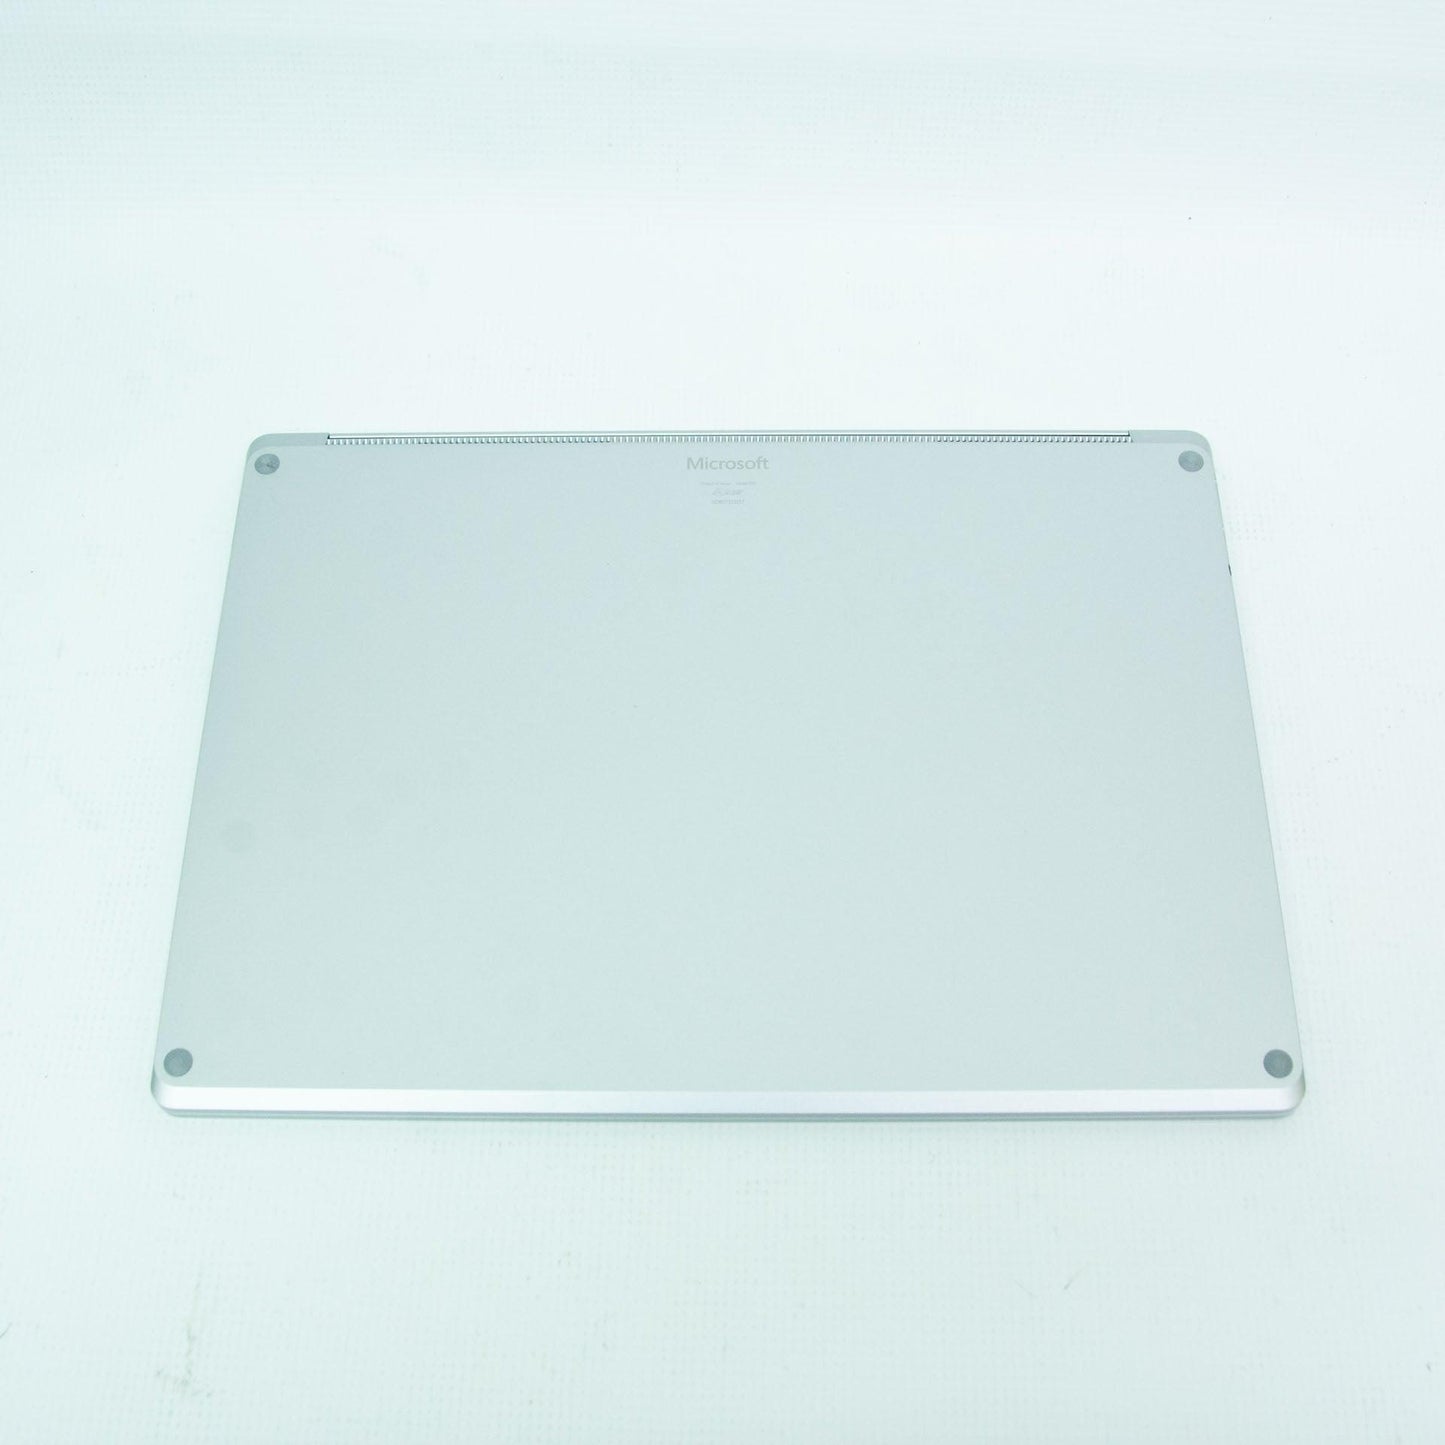 Microsoft Surface Laptop 1979 15" i7-1186G7, 16 GB Ram, 500 GB SSD - Silver - ipawnishop.com